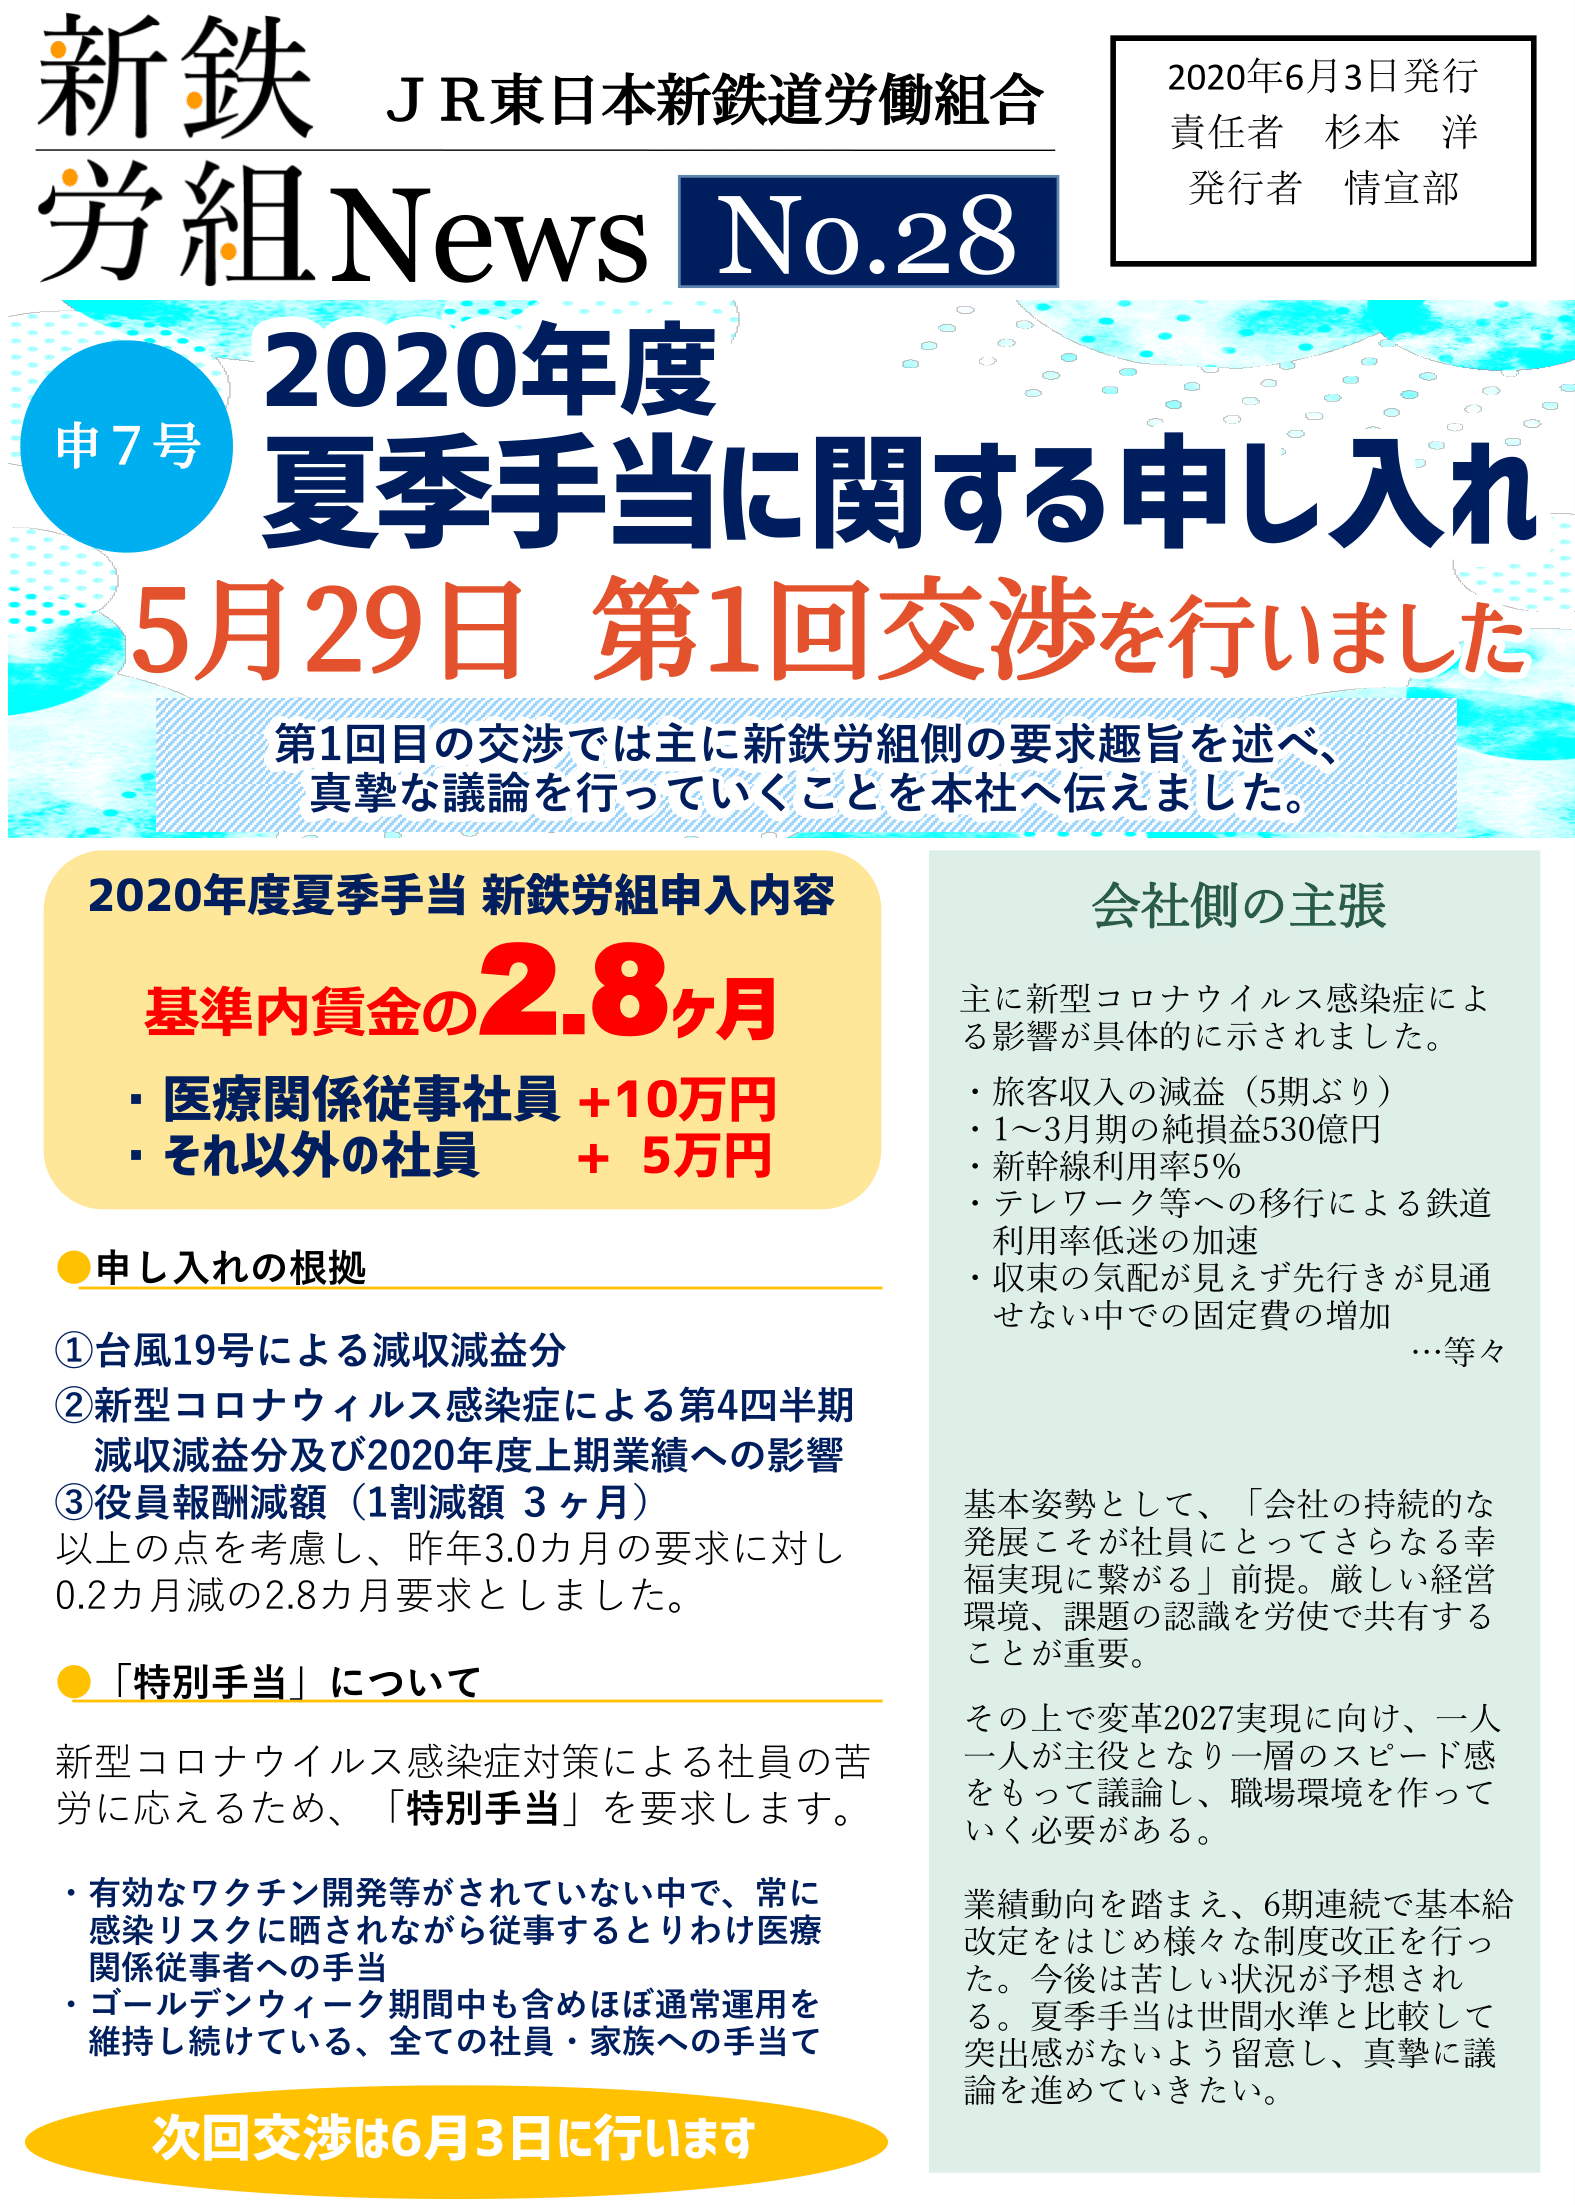 JRENU-NEWS_201906_28-1